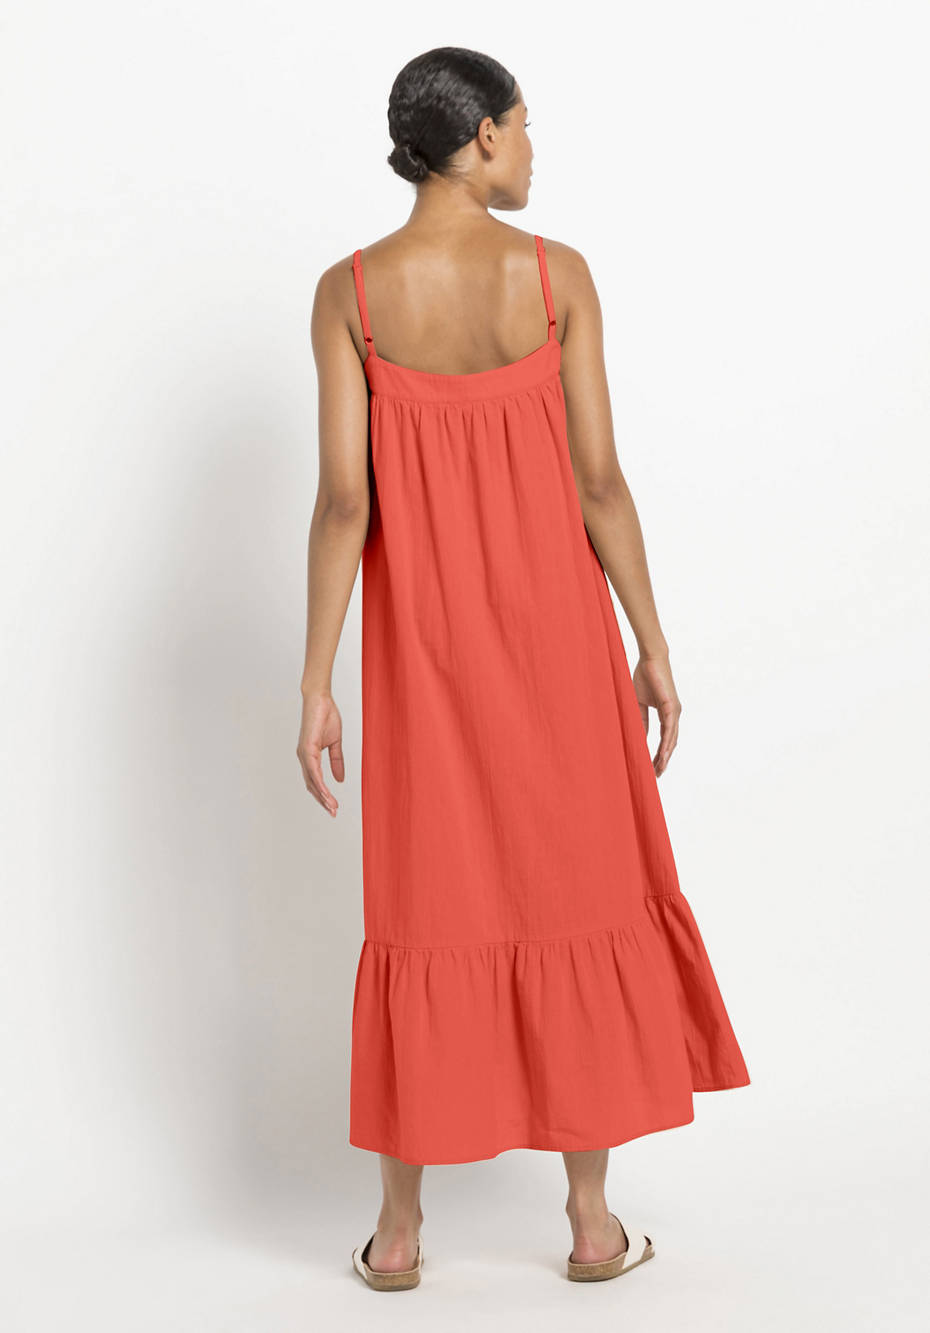 Organic cotton and linen crepe dress